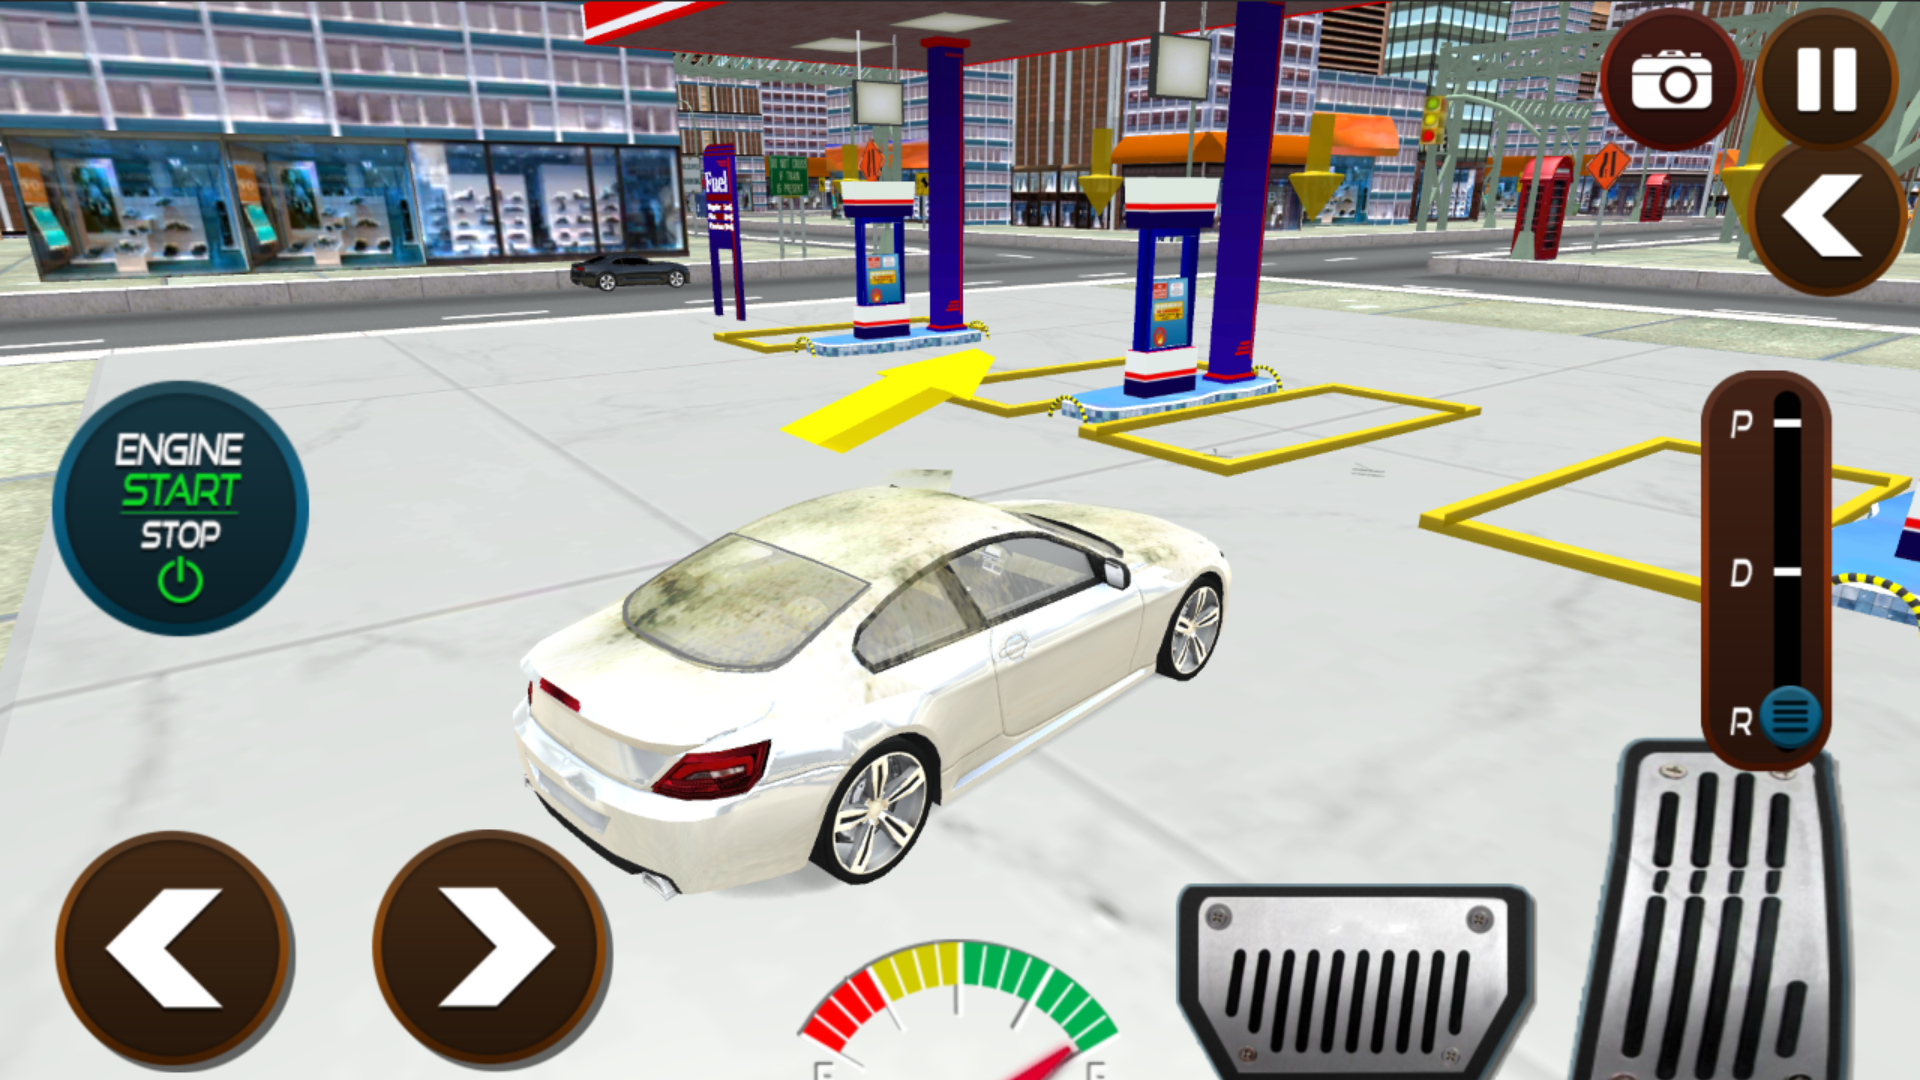 Car Wash Gas Station Garage 3D